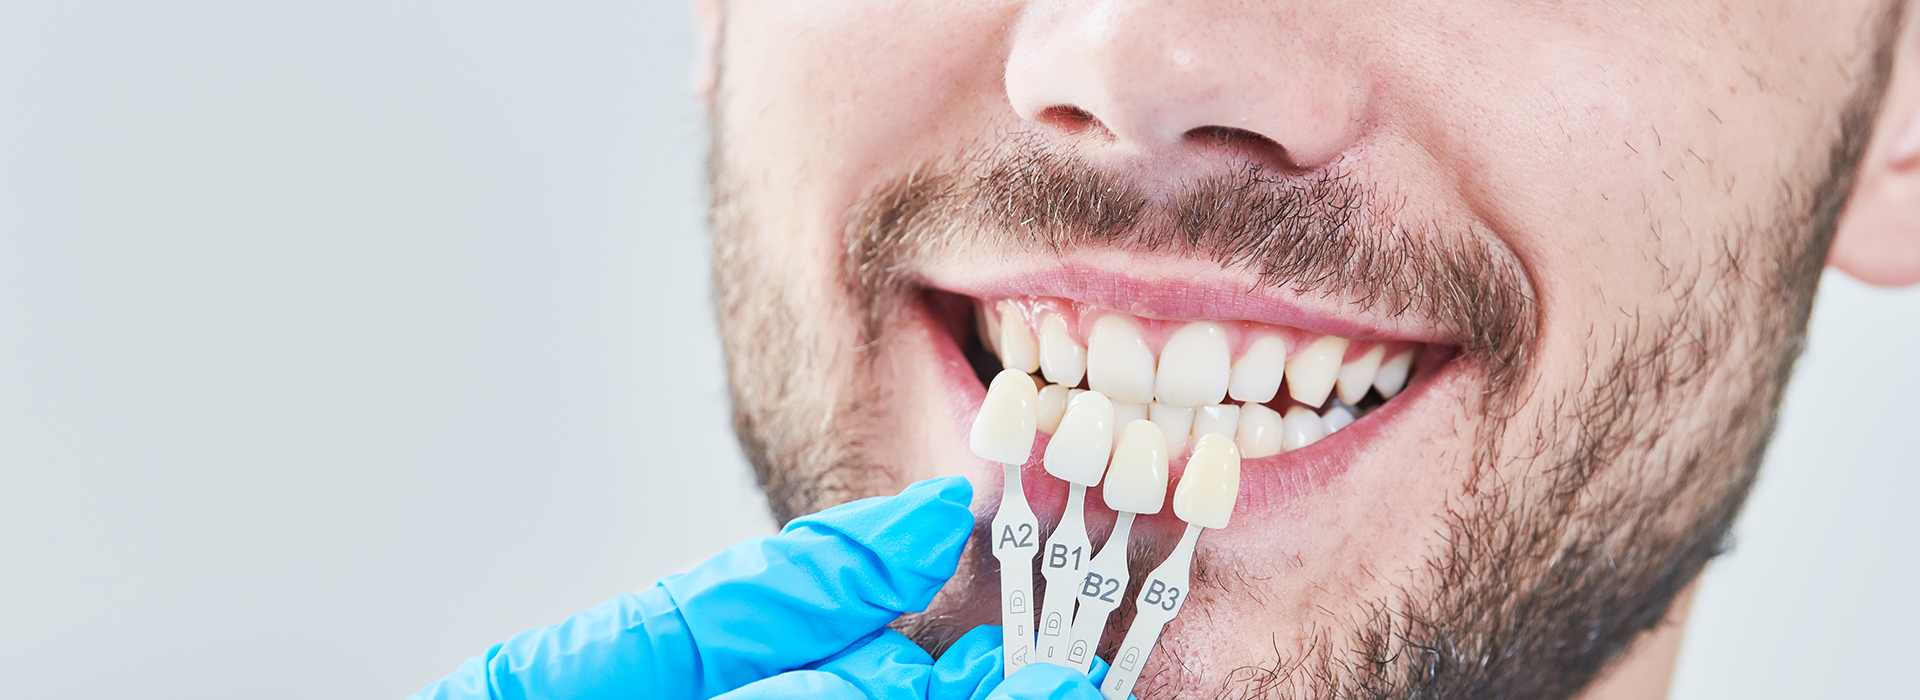 Smile Philosophy Dental Care | Implant Restorations, Ceramic Crowns and Preventative Program